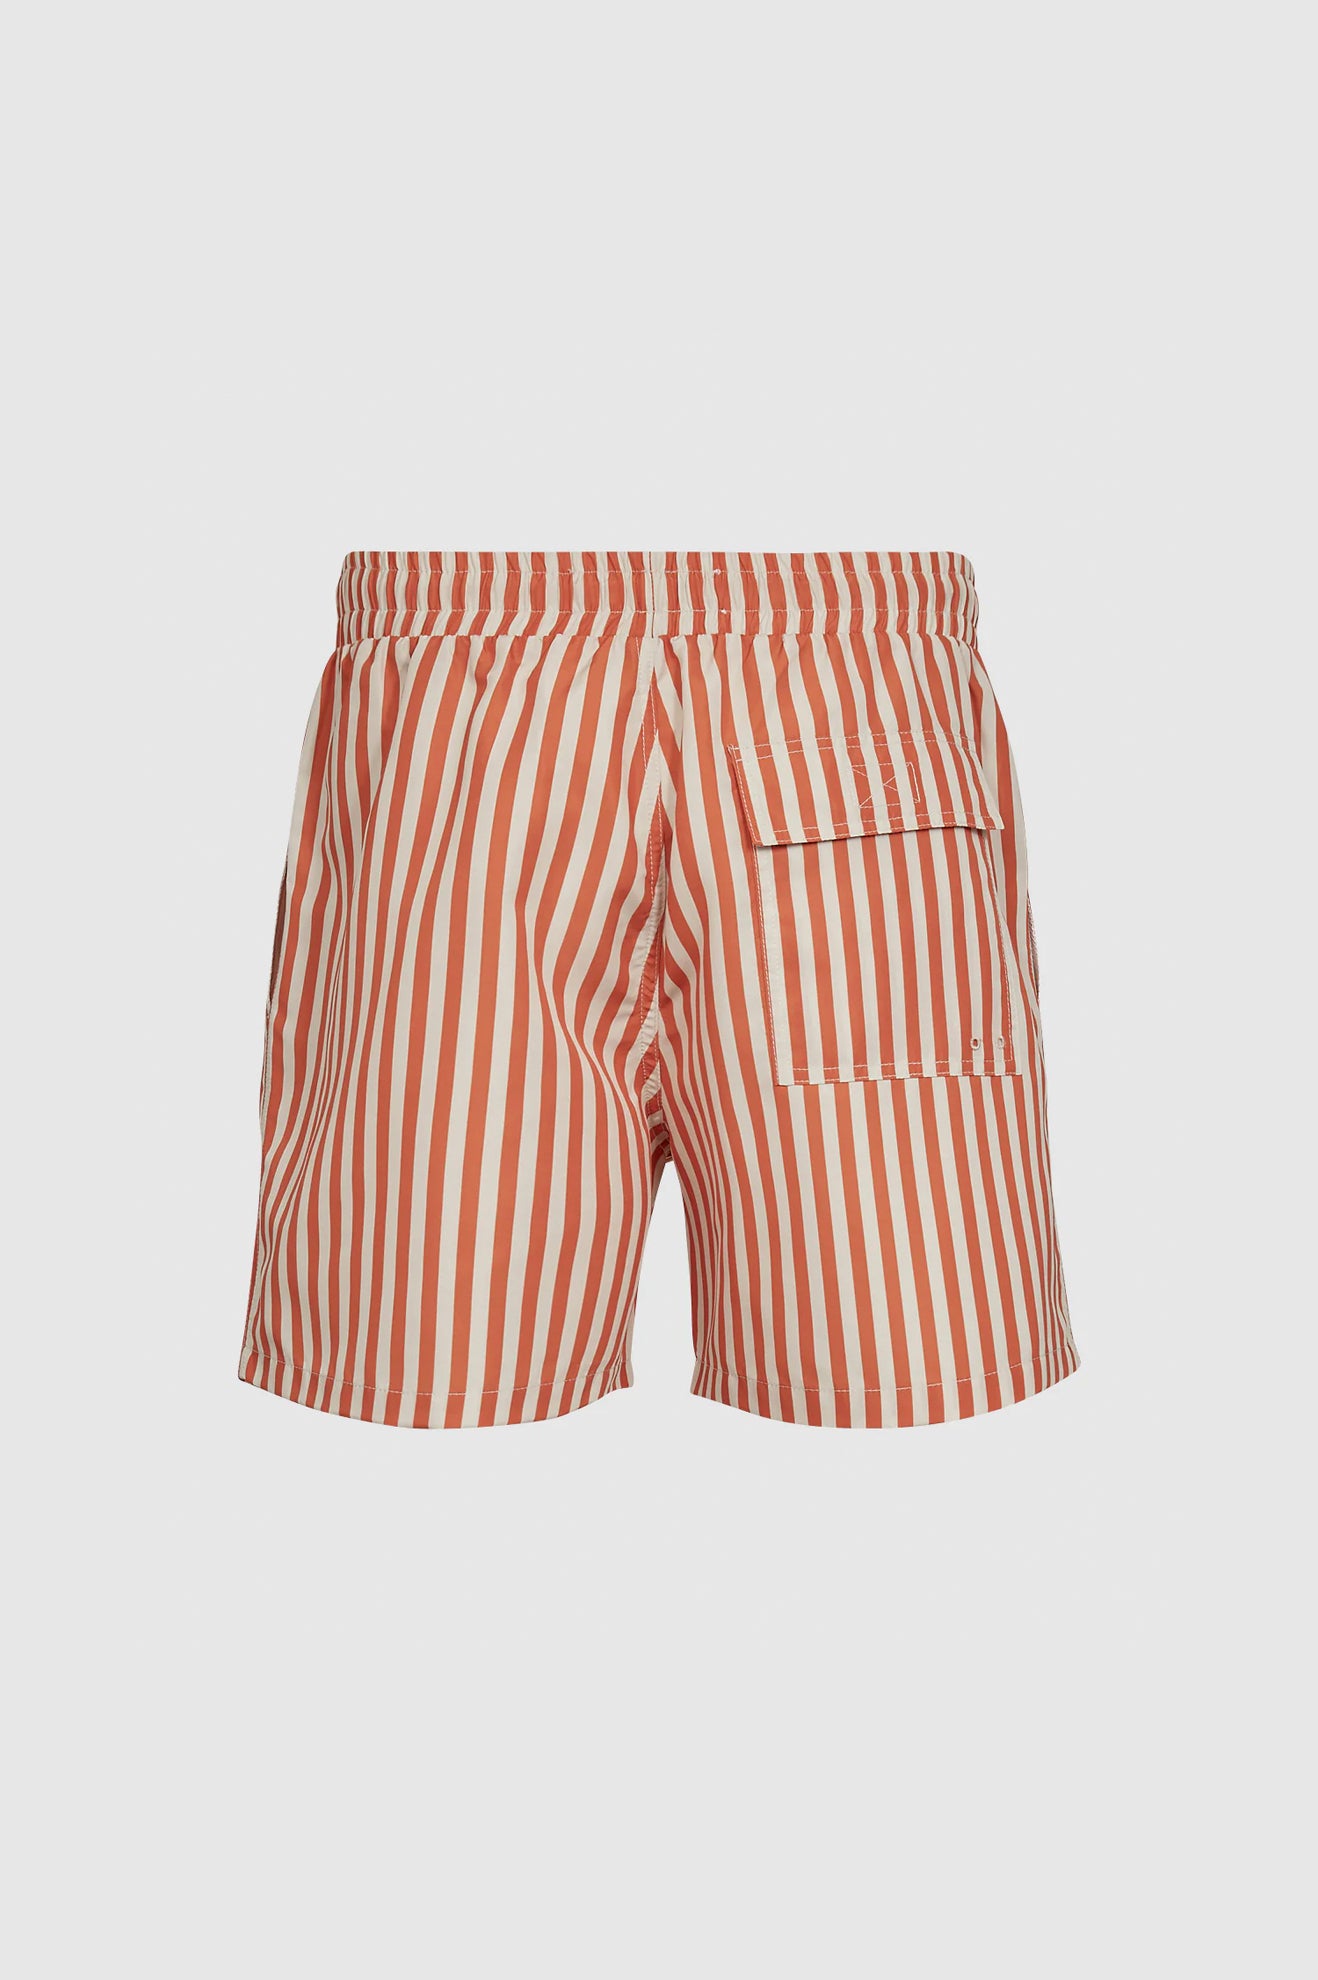 Men's Minimum Clothing Weston Shorts in Apricot Orange